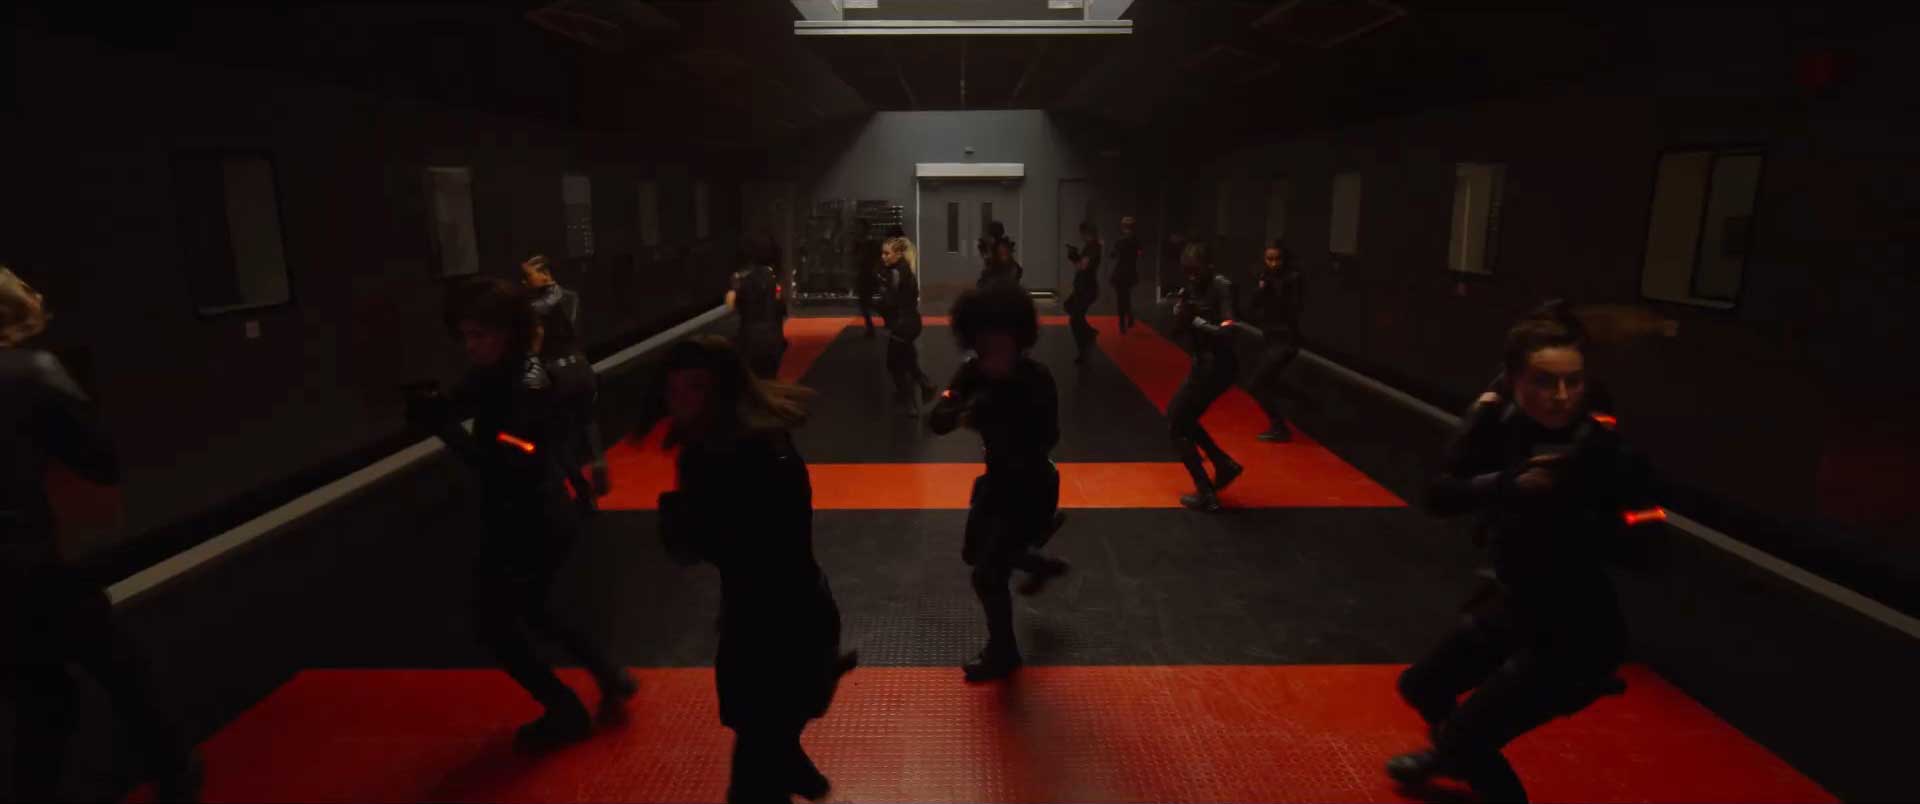 Black Widow Teaser Trailer Breakdown - Red Room Assassins